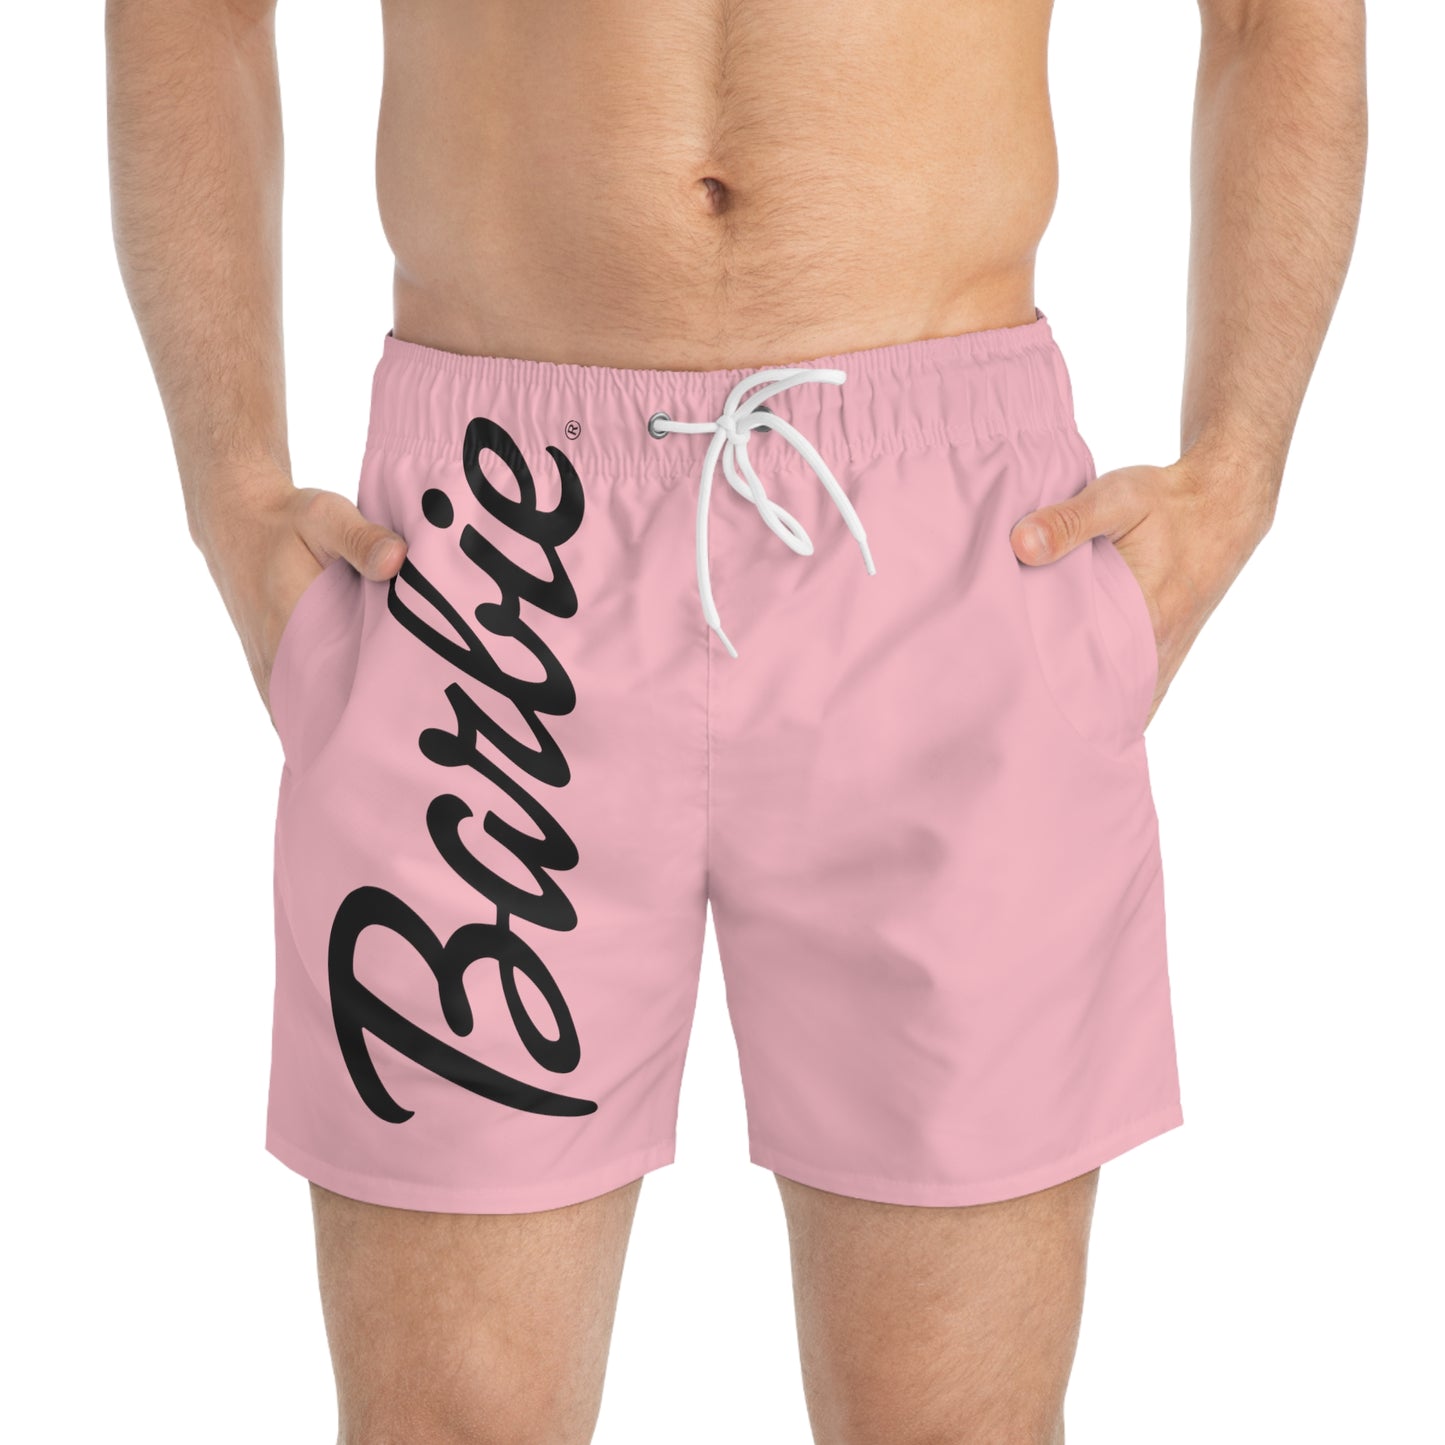 BARBIE Pastel Pink Unisex Swim Trunks: Timeless Elegance for Your Summer Sojourns!